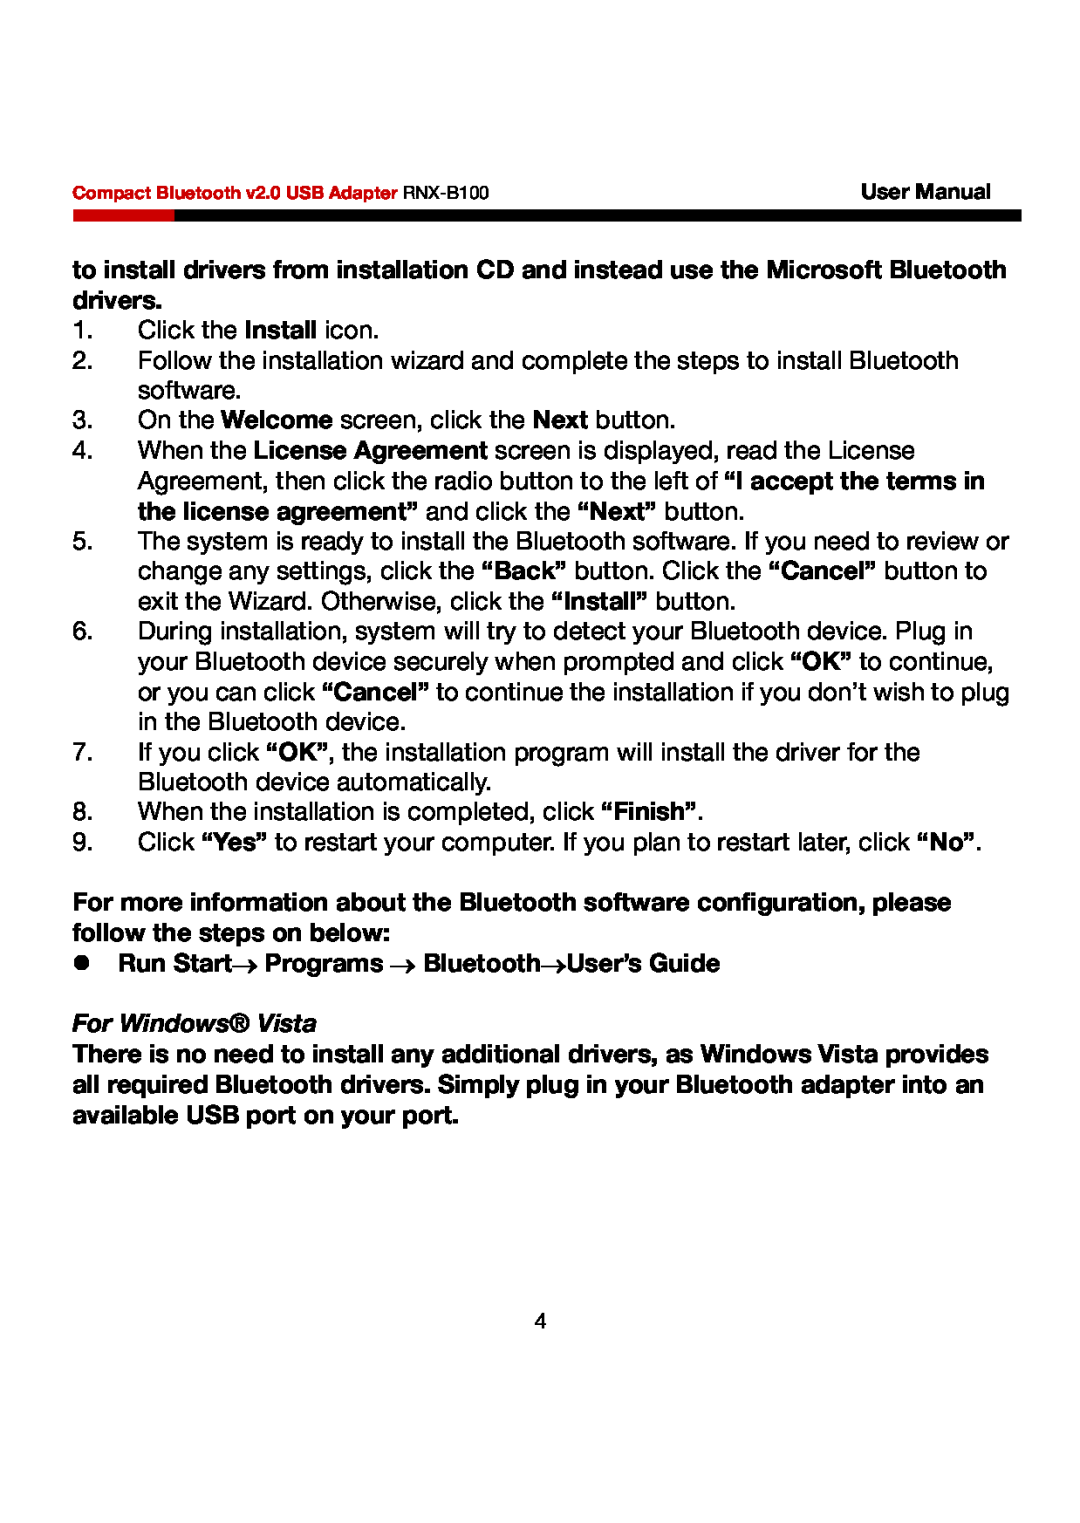 Rosewill RNX-B100 user manual For Windows Vista 